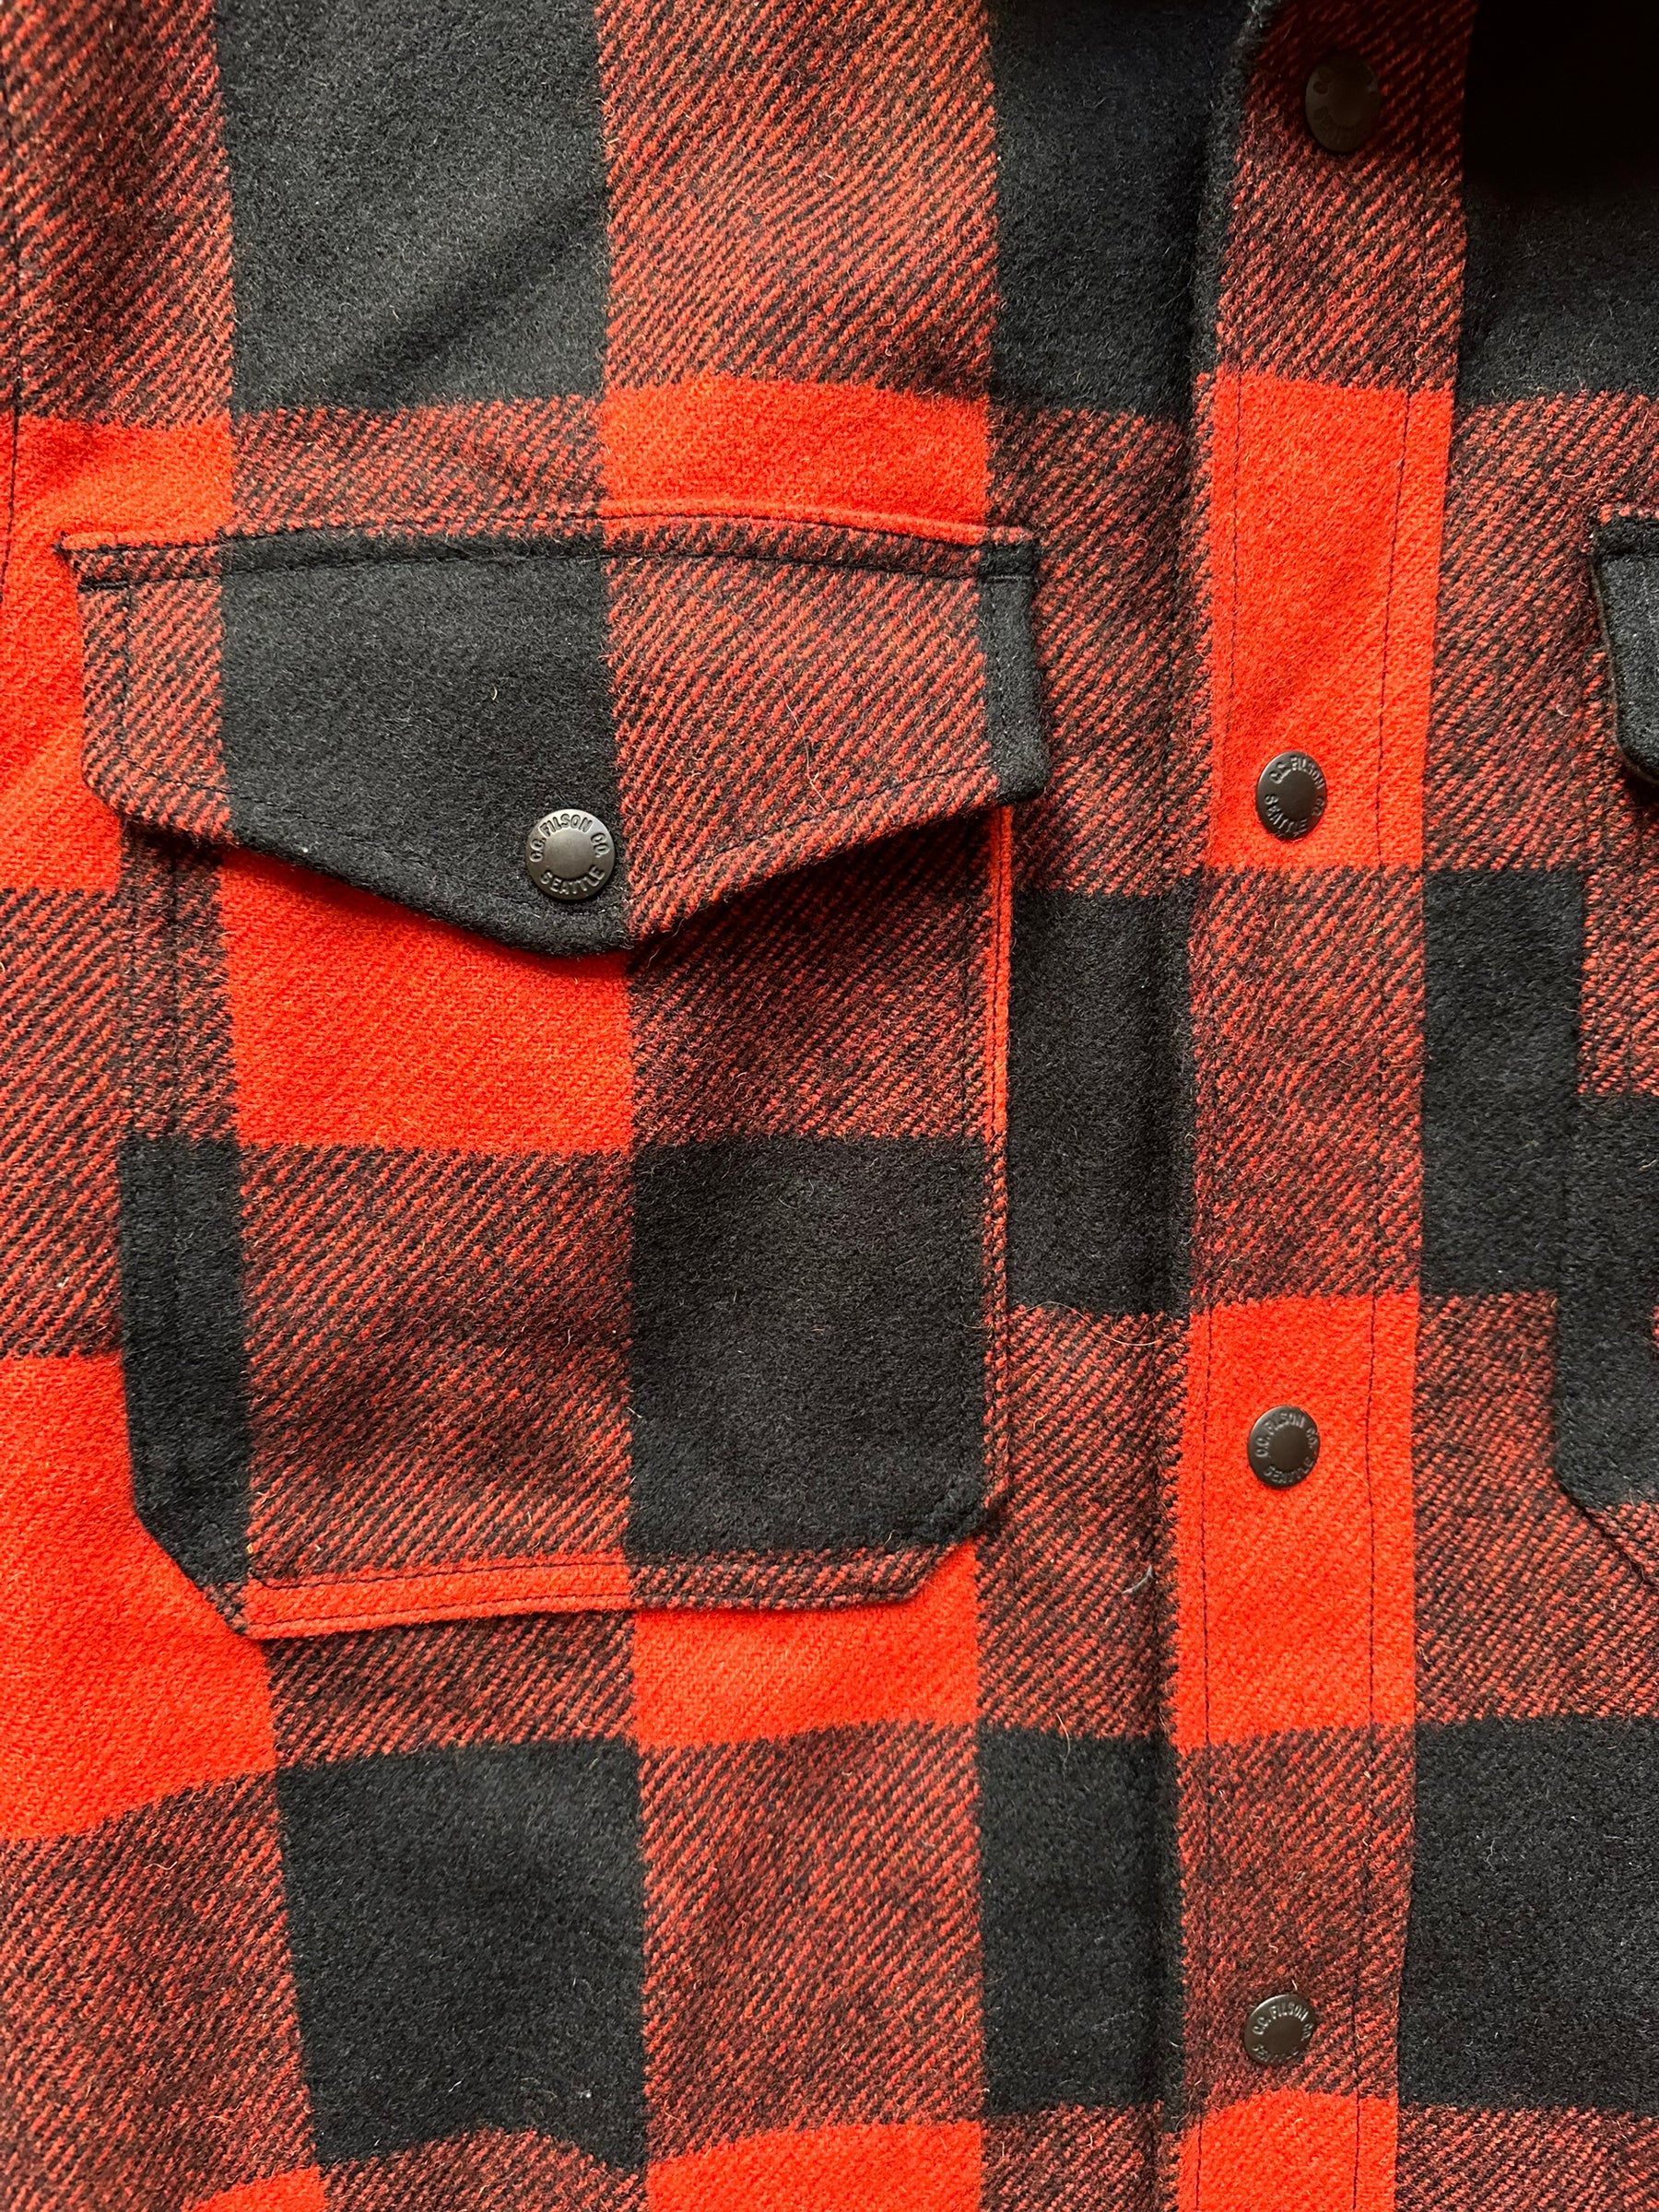 Front Pocket View of Filson Black Blaze Mackinaw Lined Jac Shirt SZ M |  Barn Owl Vintage Goods | Vintage Filson Workwear Seattle